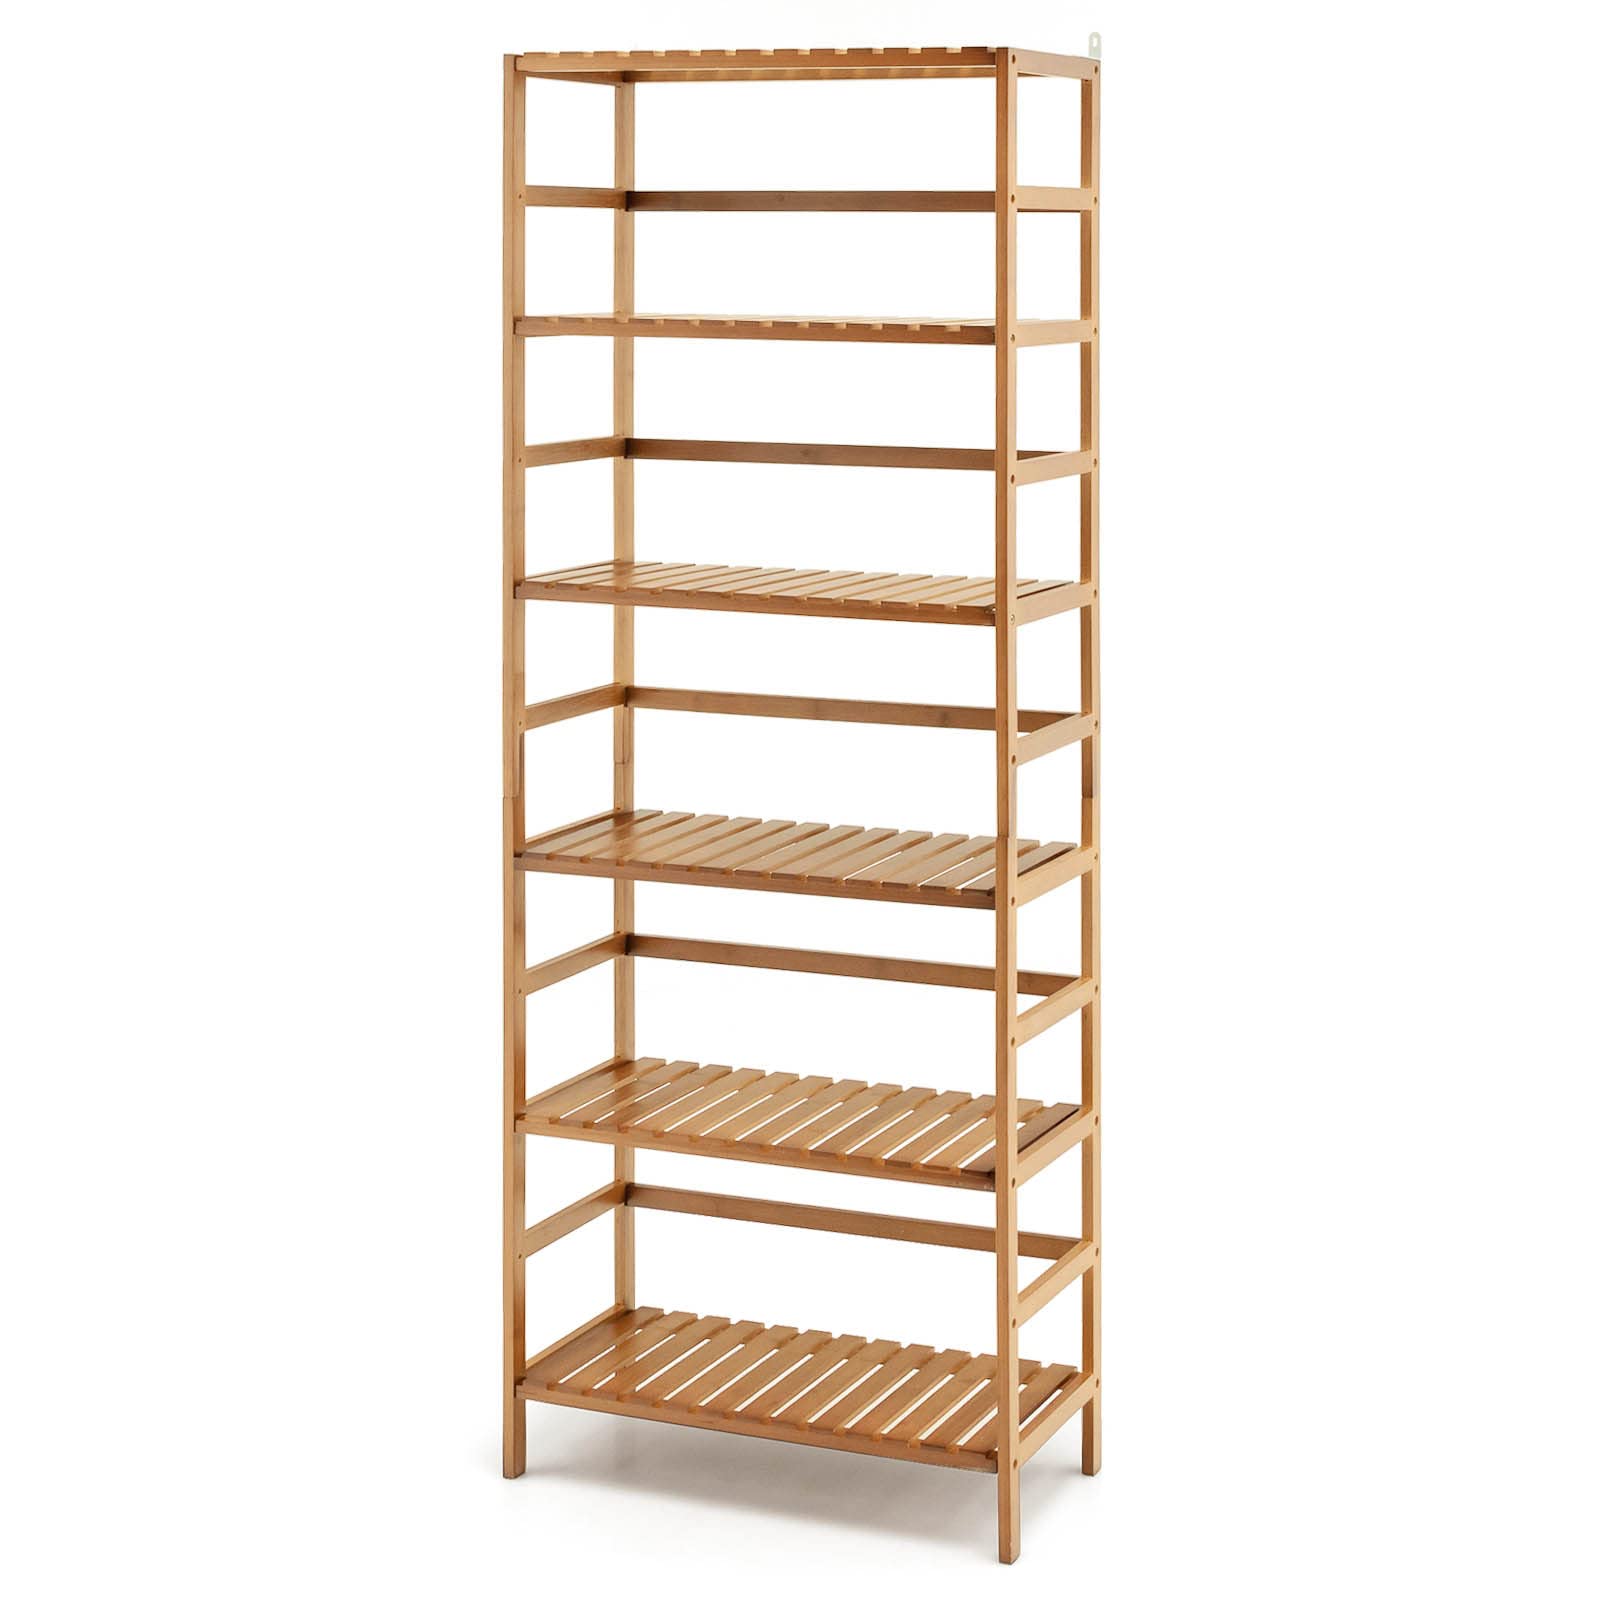 Giantex 6-Tier Bamboo Bookshelf, 63'' Tall Freesrtanding Storage Display Shelf with Adjustable Shelves